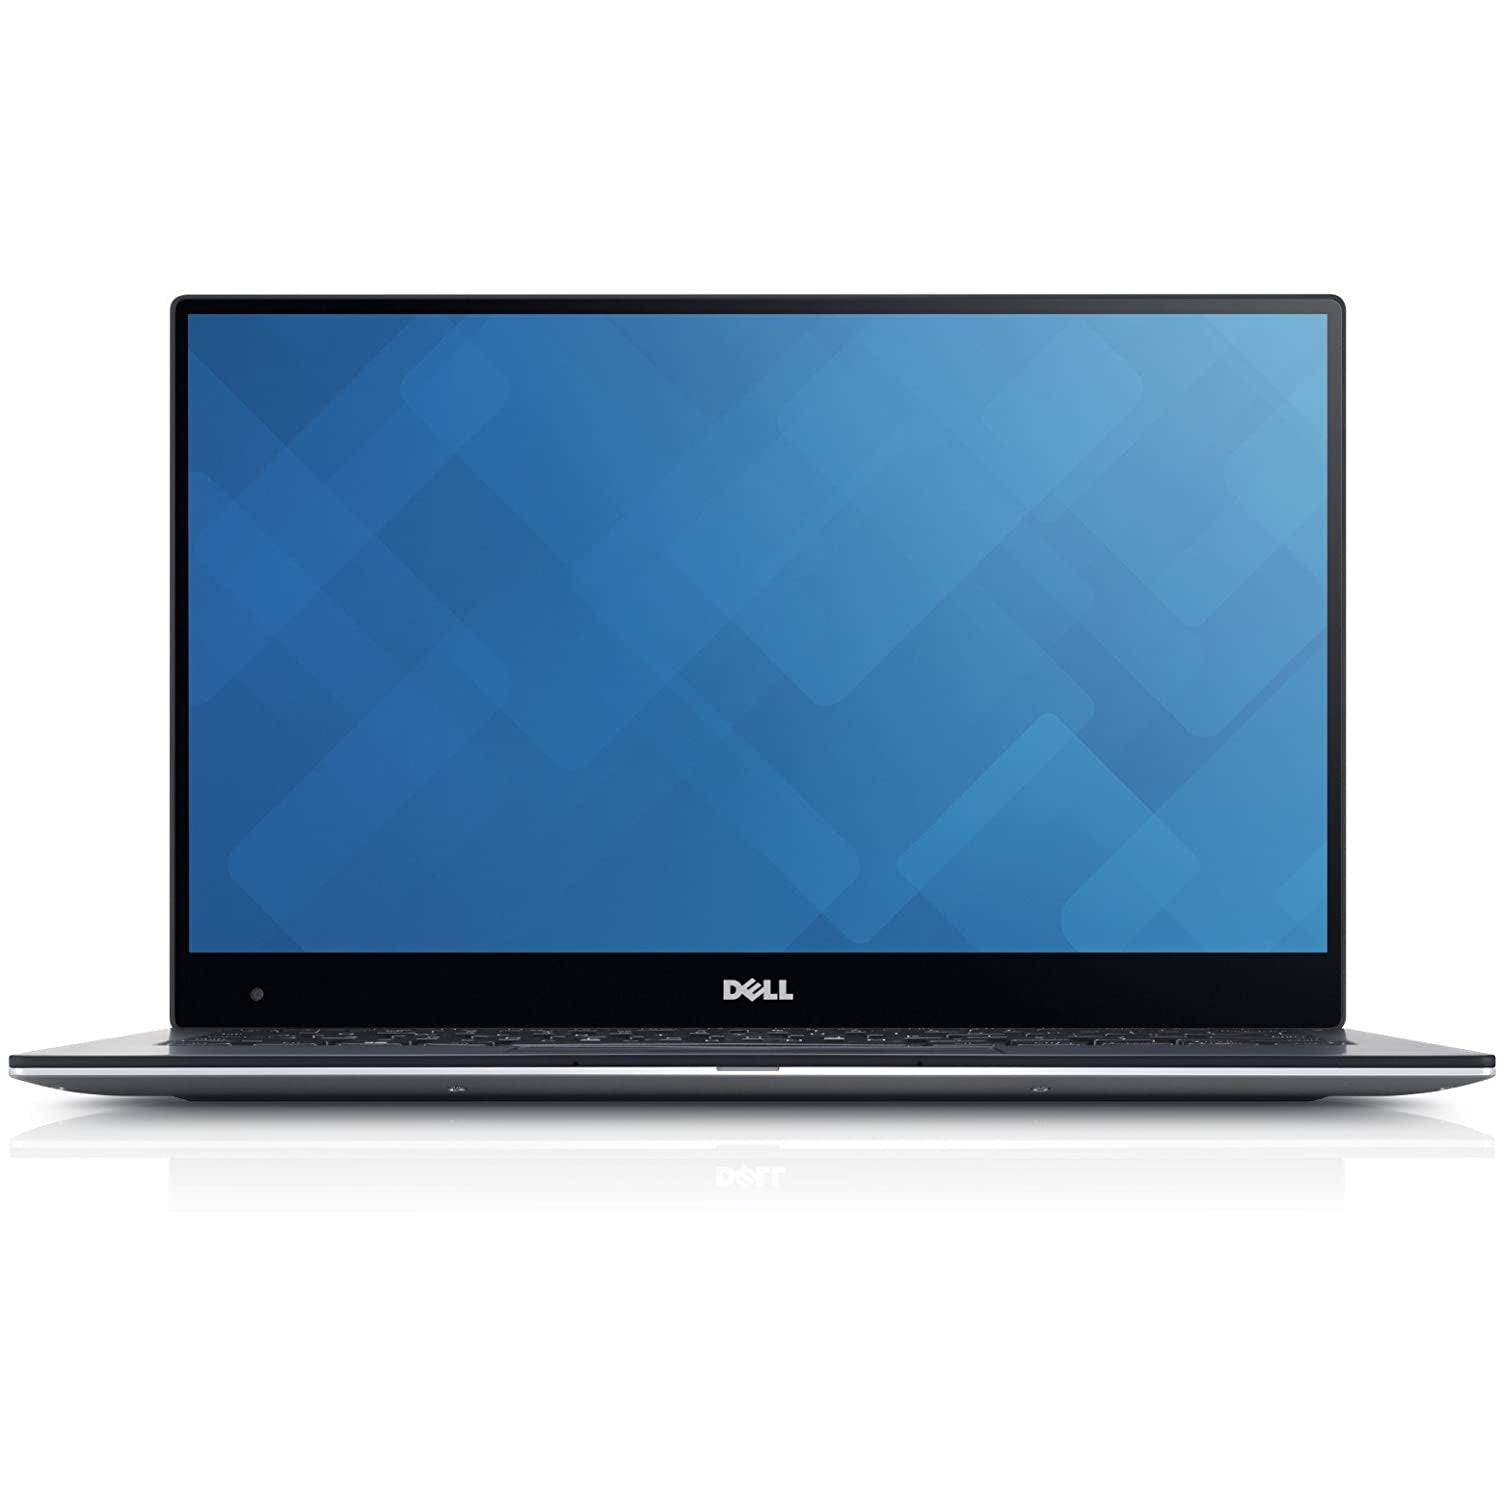 Dell XPS 13 9360 Laptop, Intel Core i5 8th Gen, 8GB RAM, 256GB SSD, 13.3”, Full HD, Silver